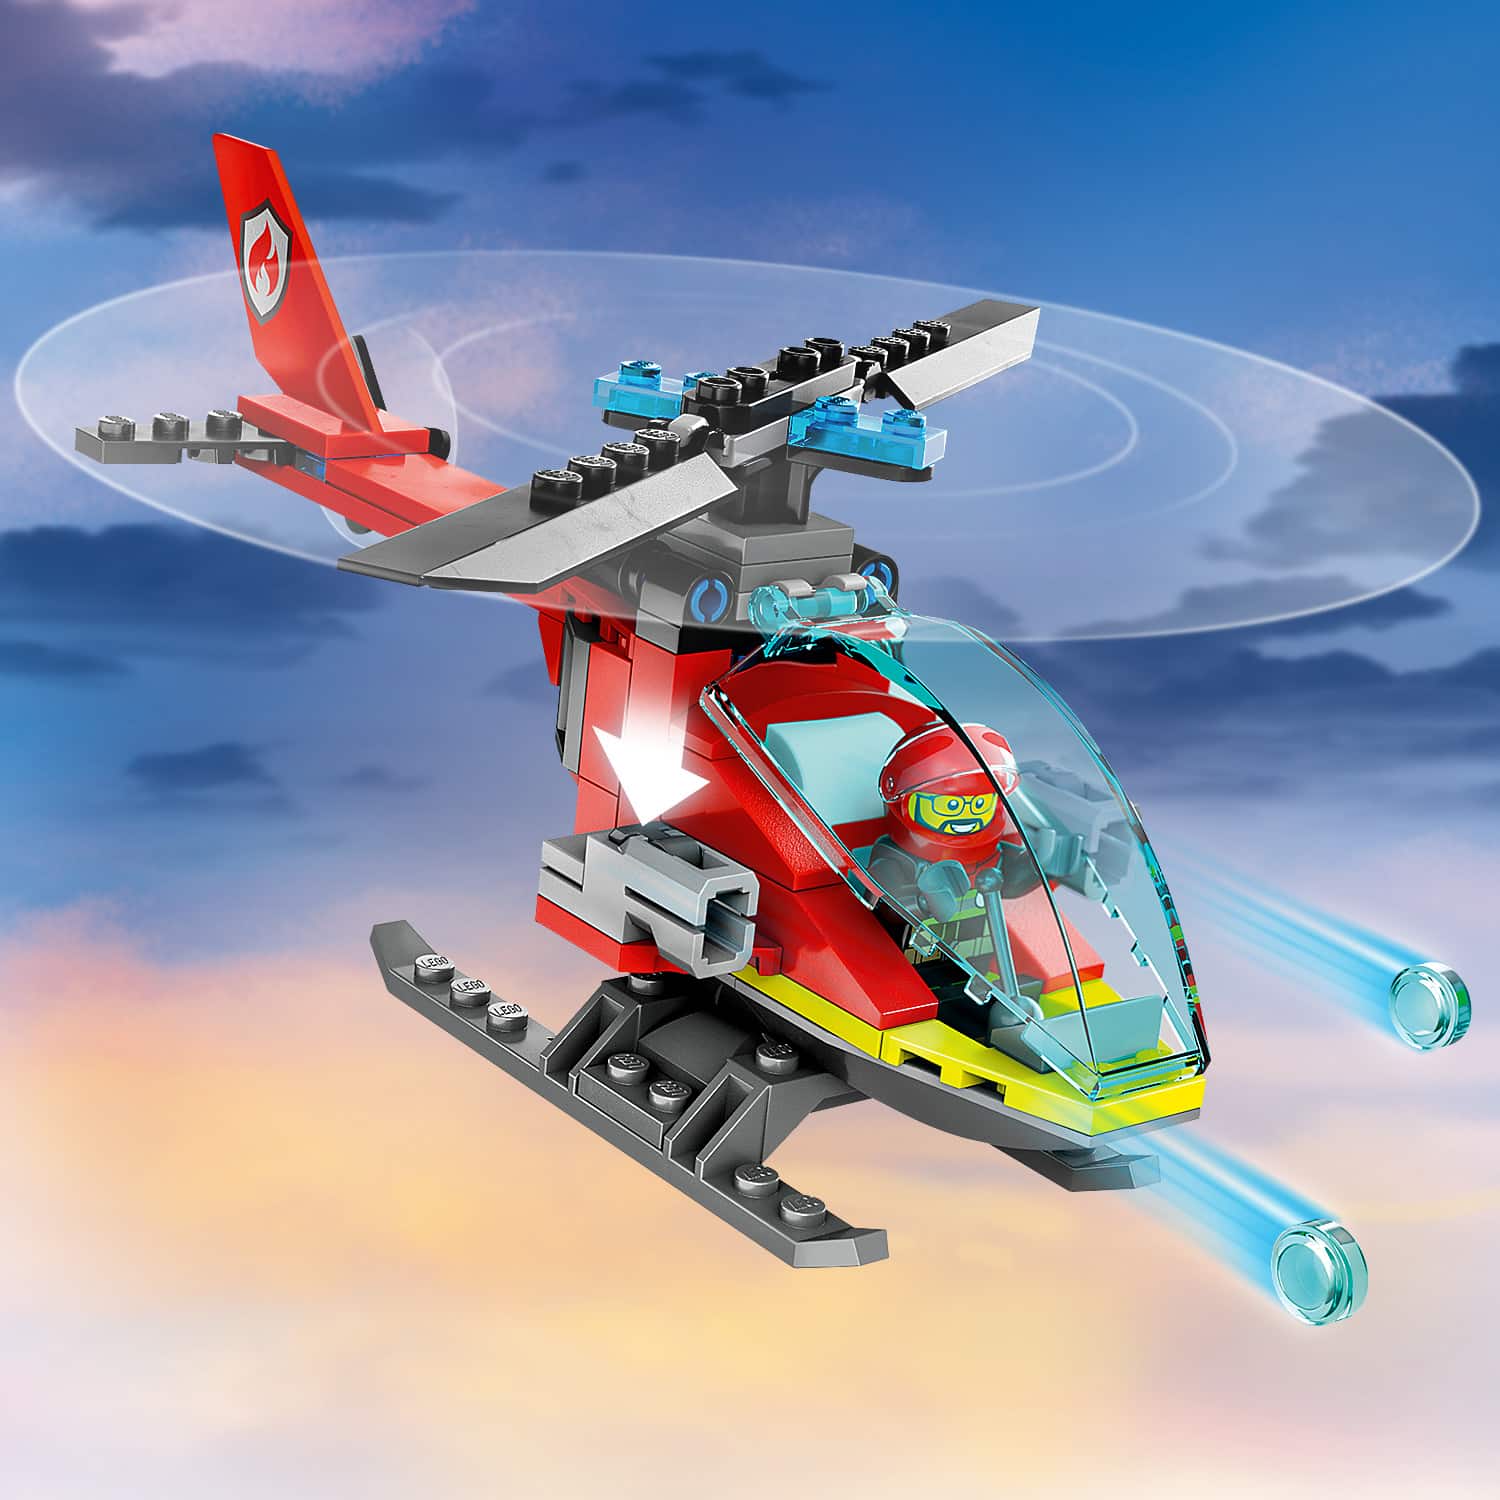 60371 Lego City Αρχηγειο Οχηματων Εκτατης Αναγκης